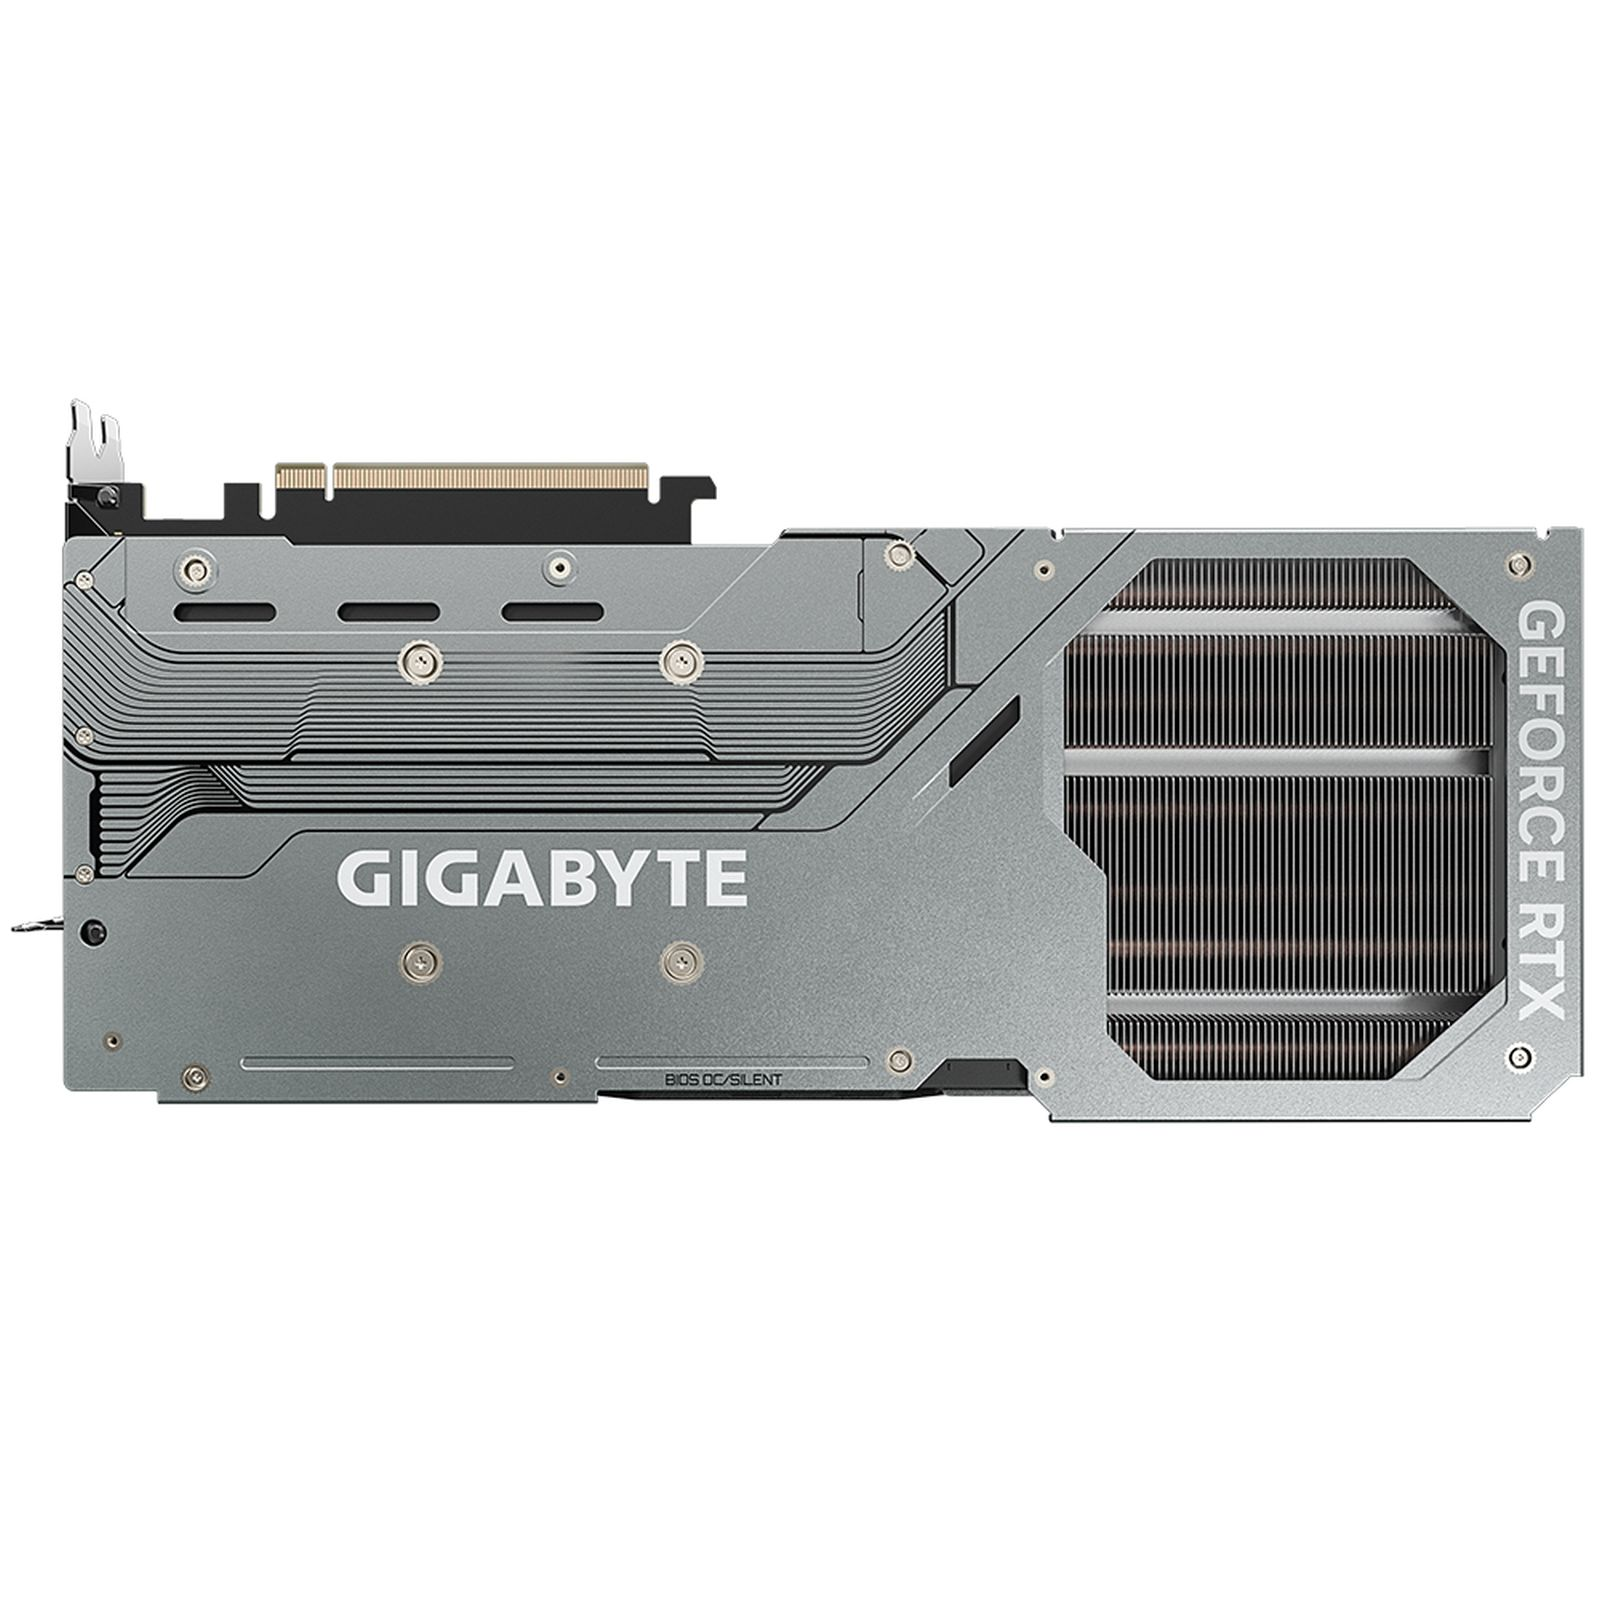 RTX (NVIDIA, 16GB OC Grafikkarte) GeForce GAMING GIGABYTE 4080